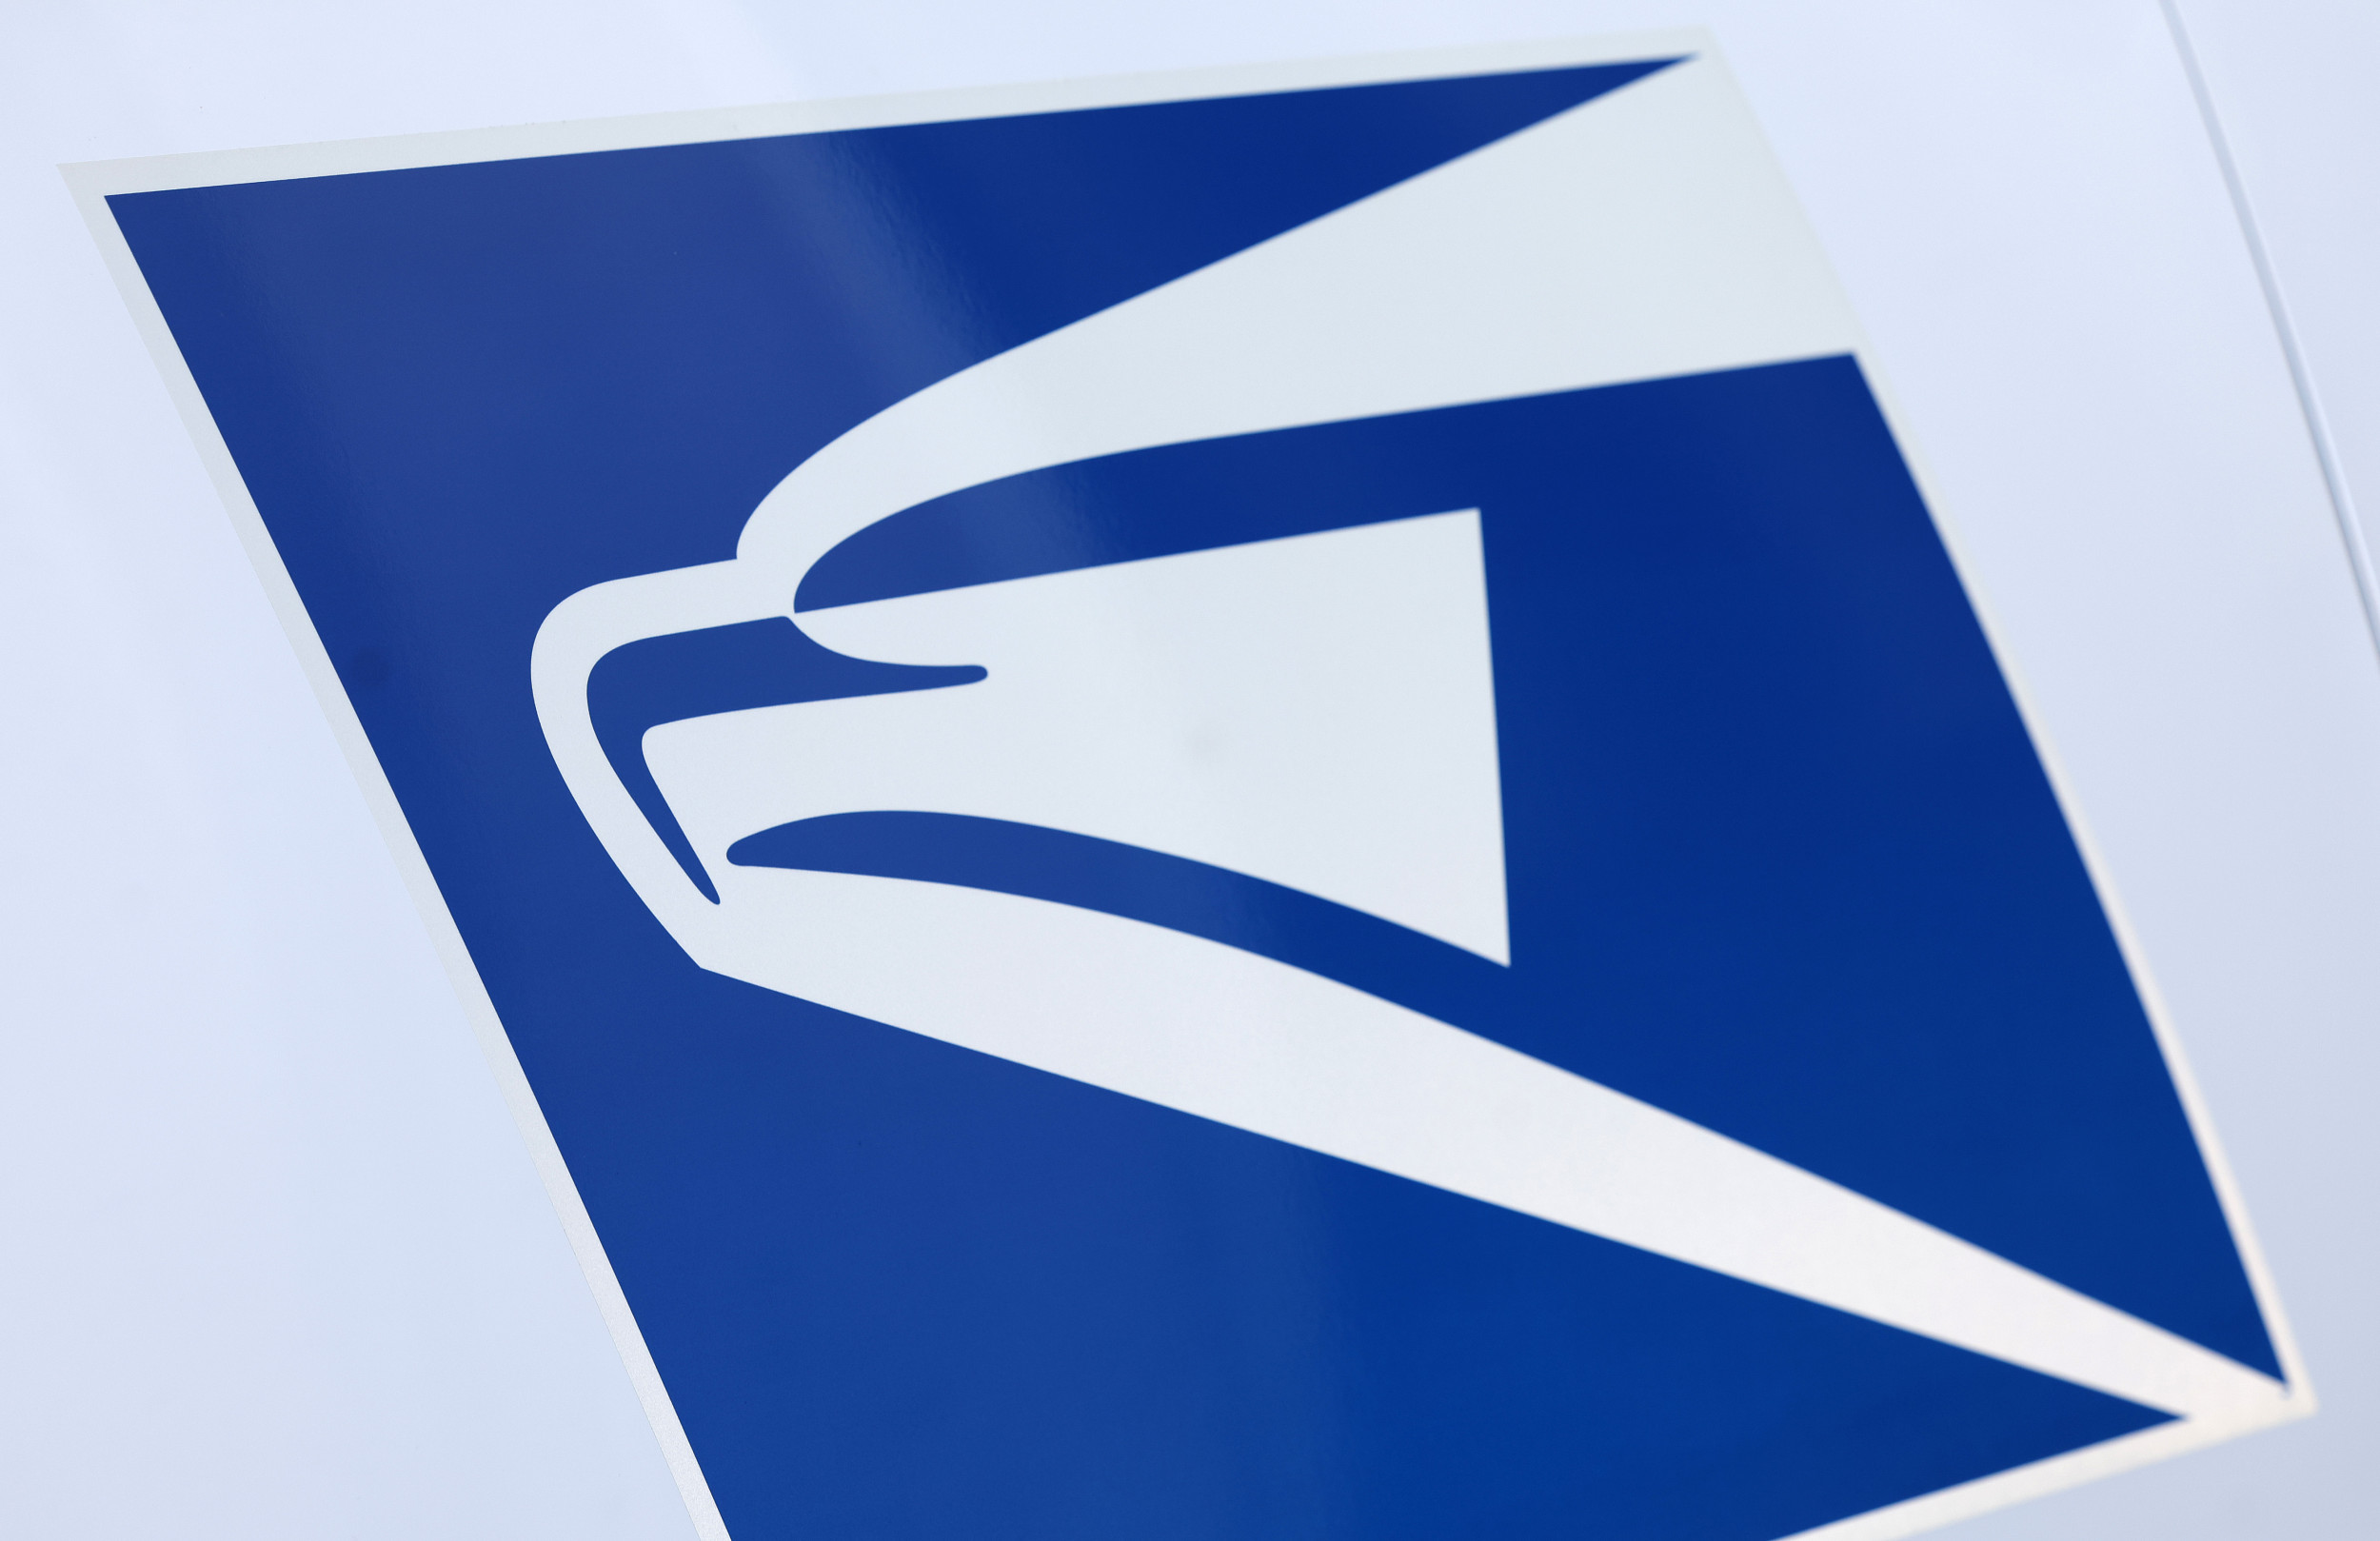 Post Office Vector Logo - Download Free SVG Icon | Worldvectorlogo